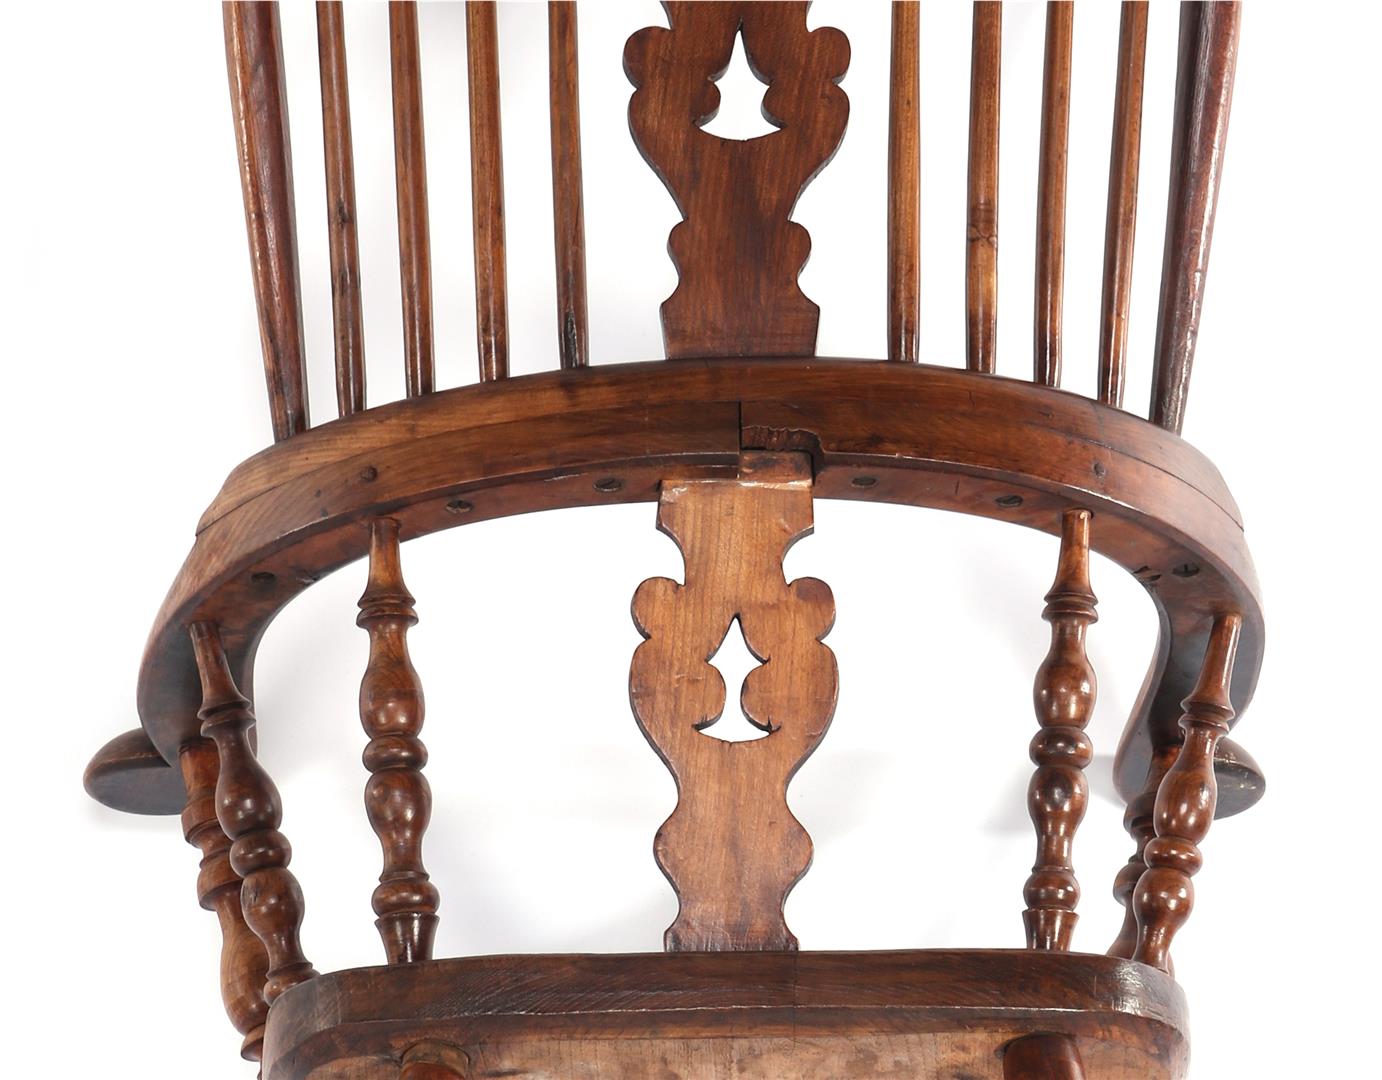 Elm wood Windsor chair - Image 2 of 2